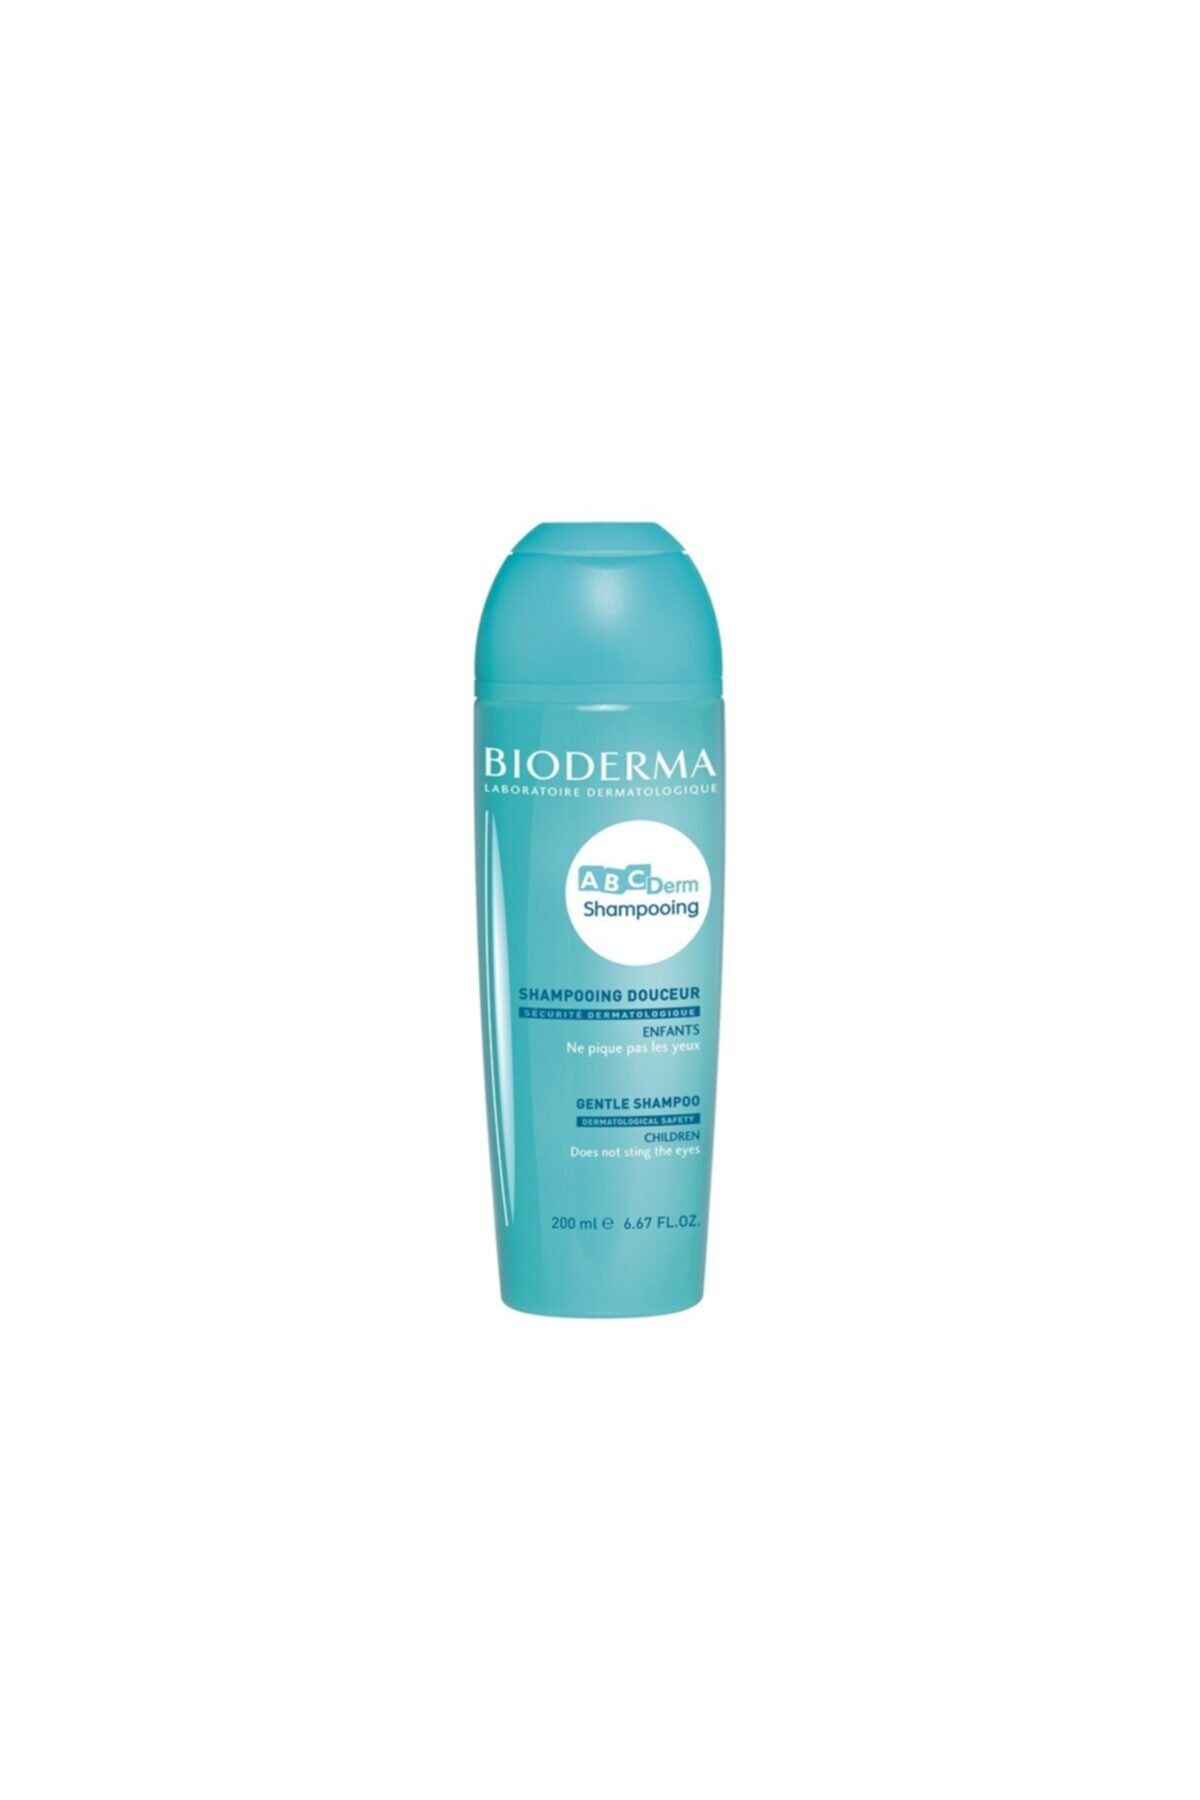 Bioderma Abcderm Gentle Shampoo 200 ml